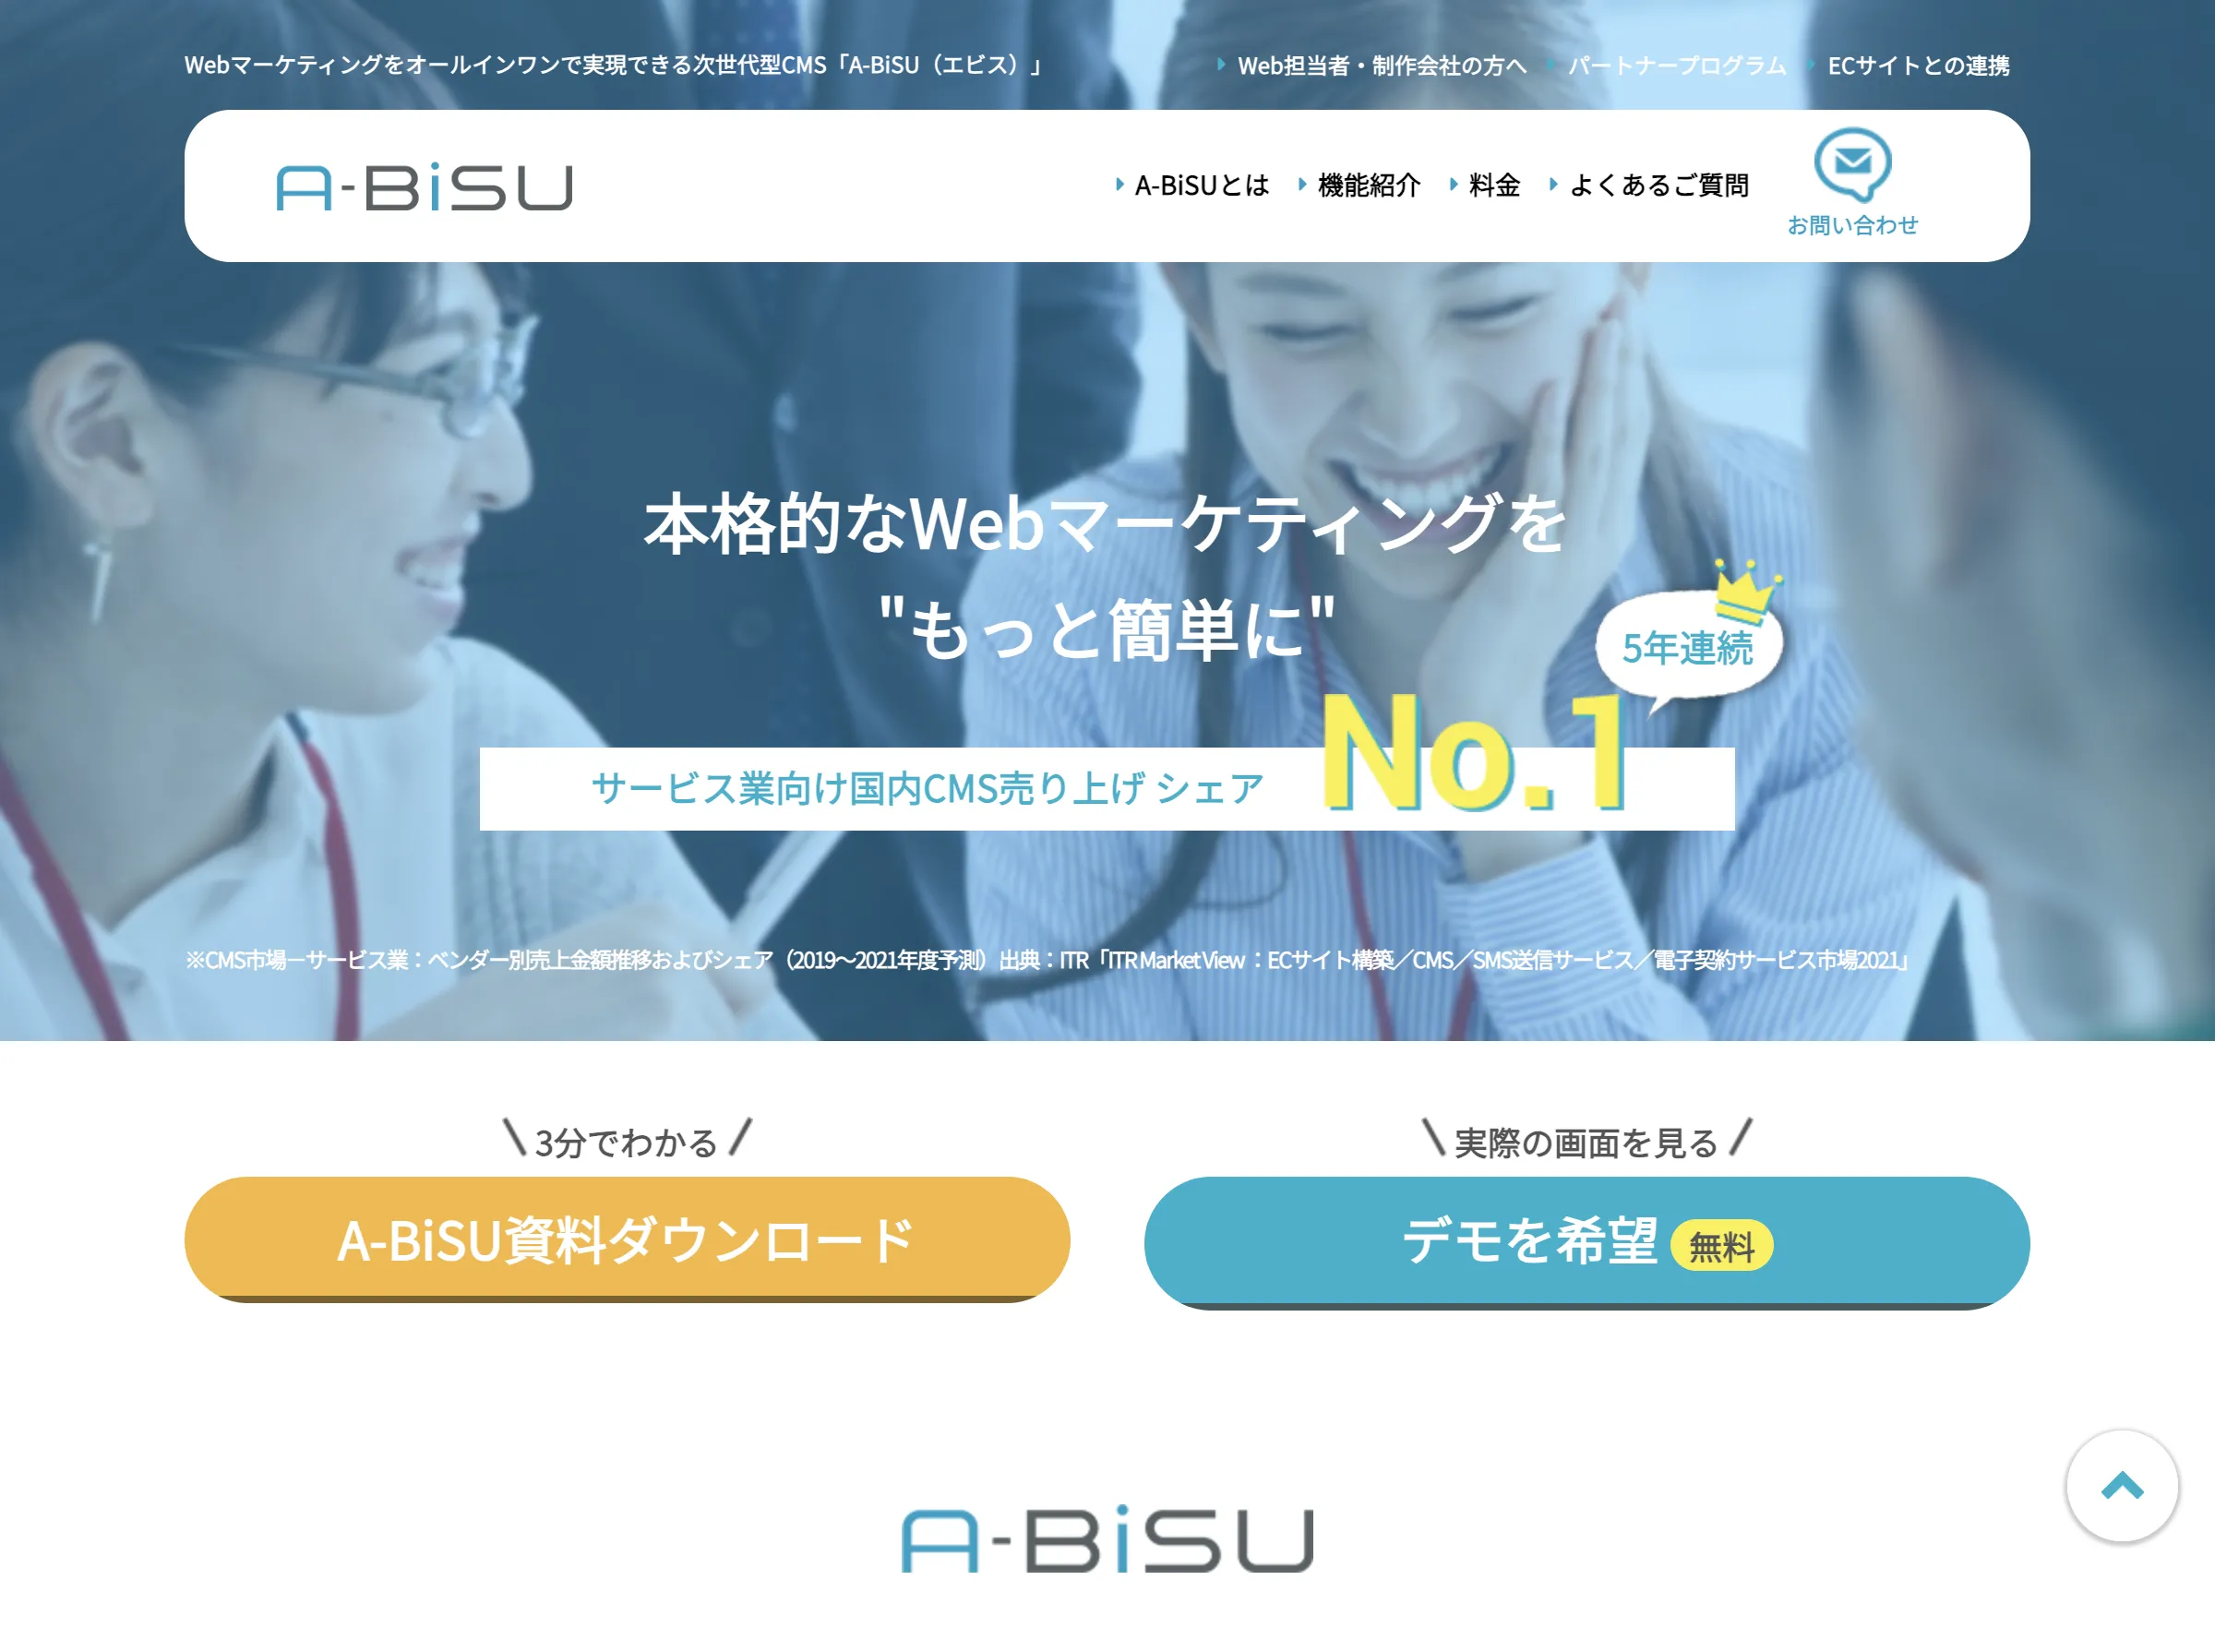 A-BiSU(株式会社ユニソンプラネット)